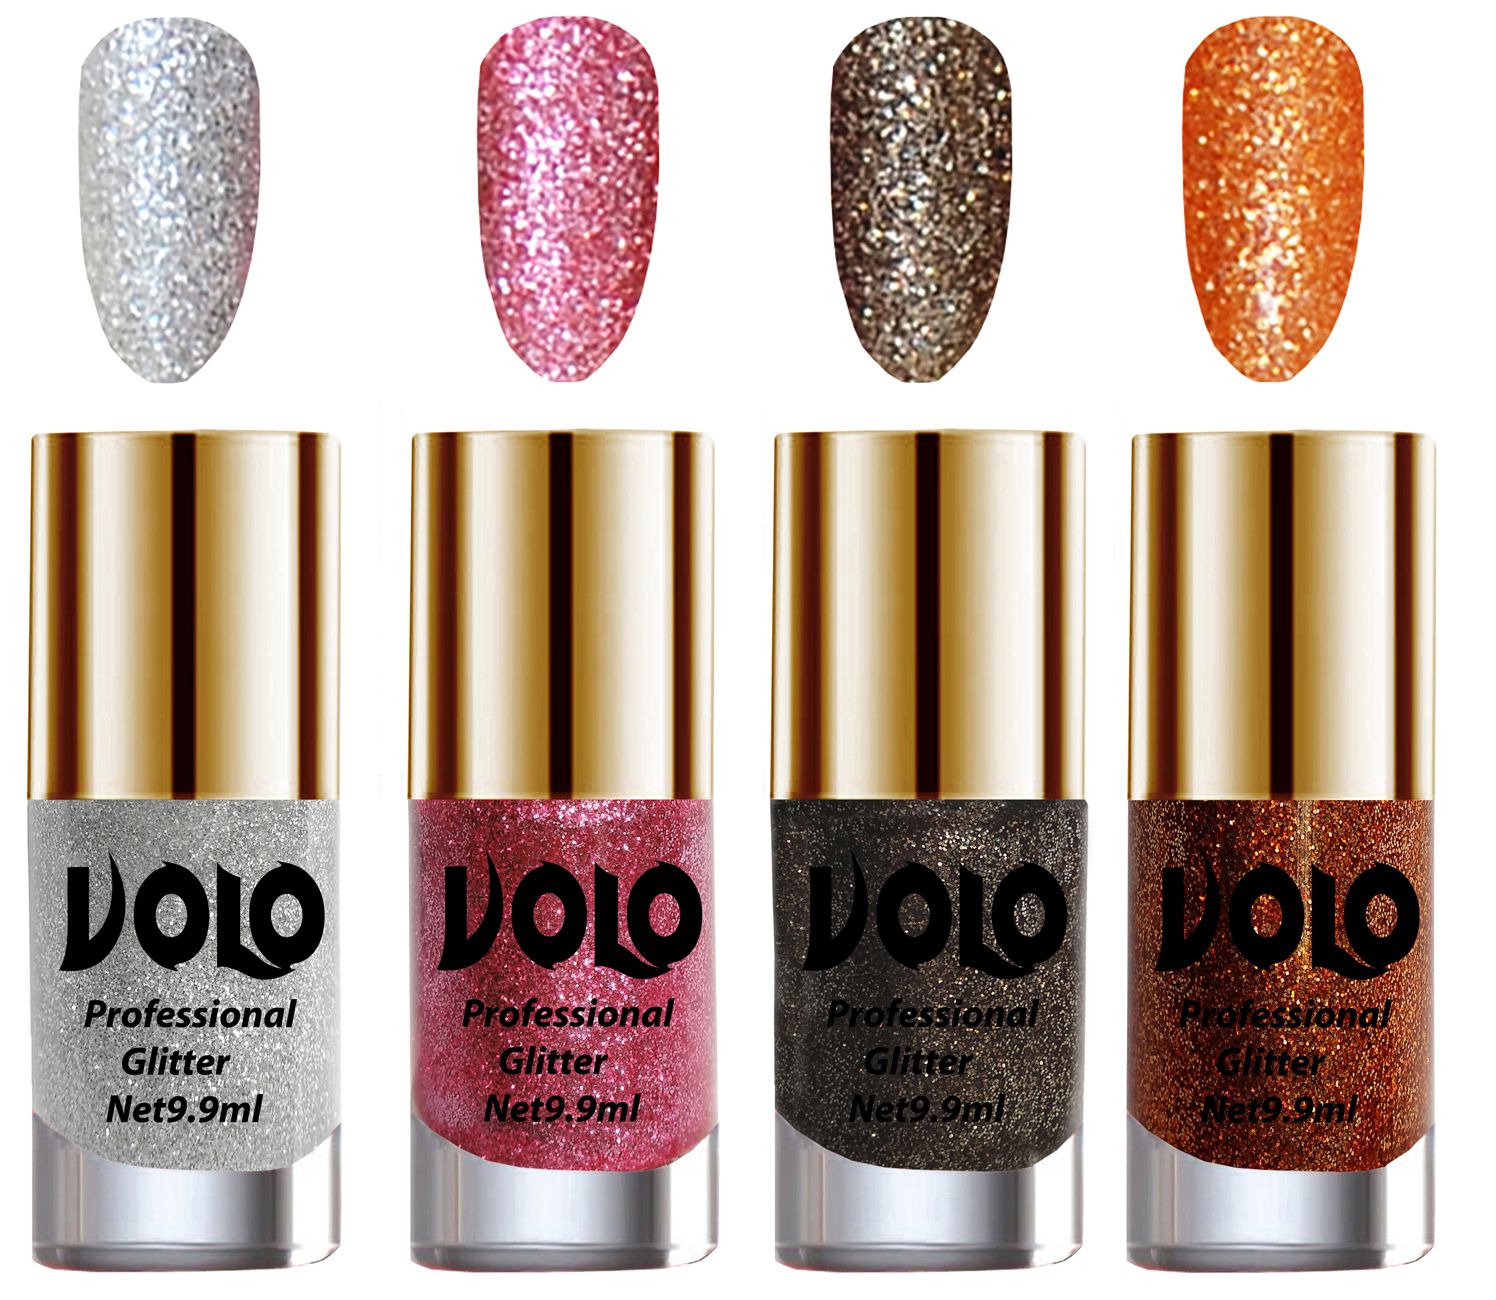     			VOLO Professionally Used Glitter Shine Nail Polish Silver,Pink,Grey Orange Pack of 4 39 mL